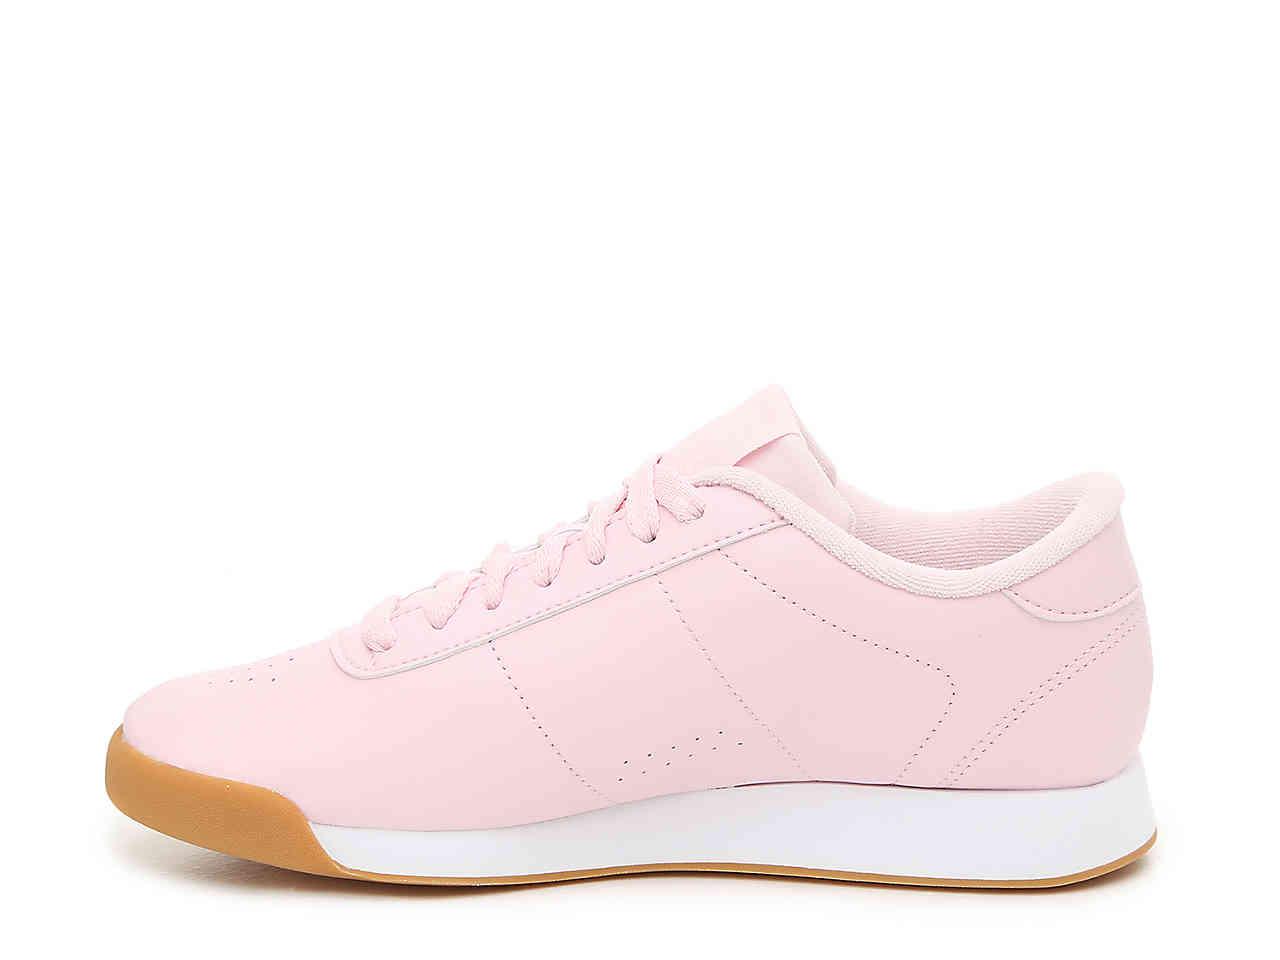 Reebok Synthetic Princess Sneaker in Pink/White/Gold Metallic (Pink) - Save  55% | Lyst